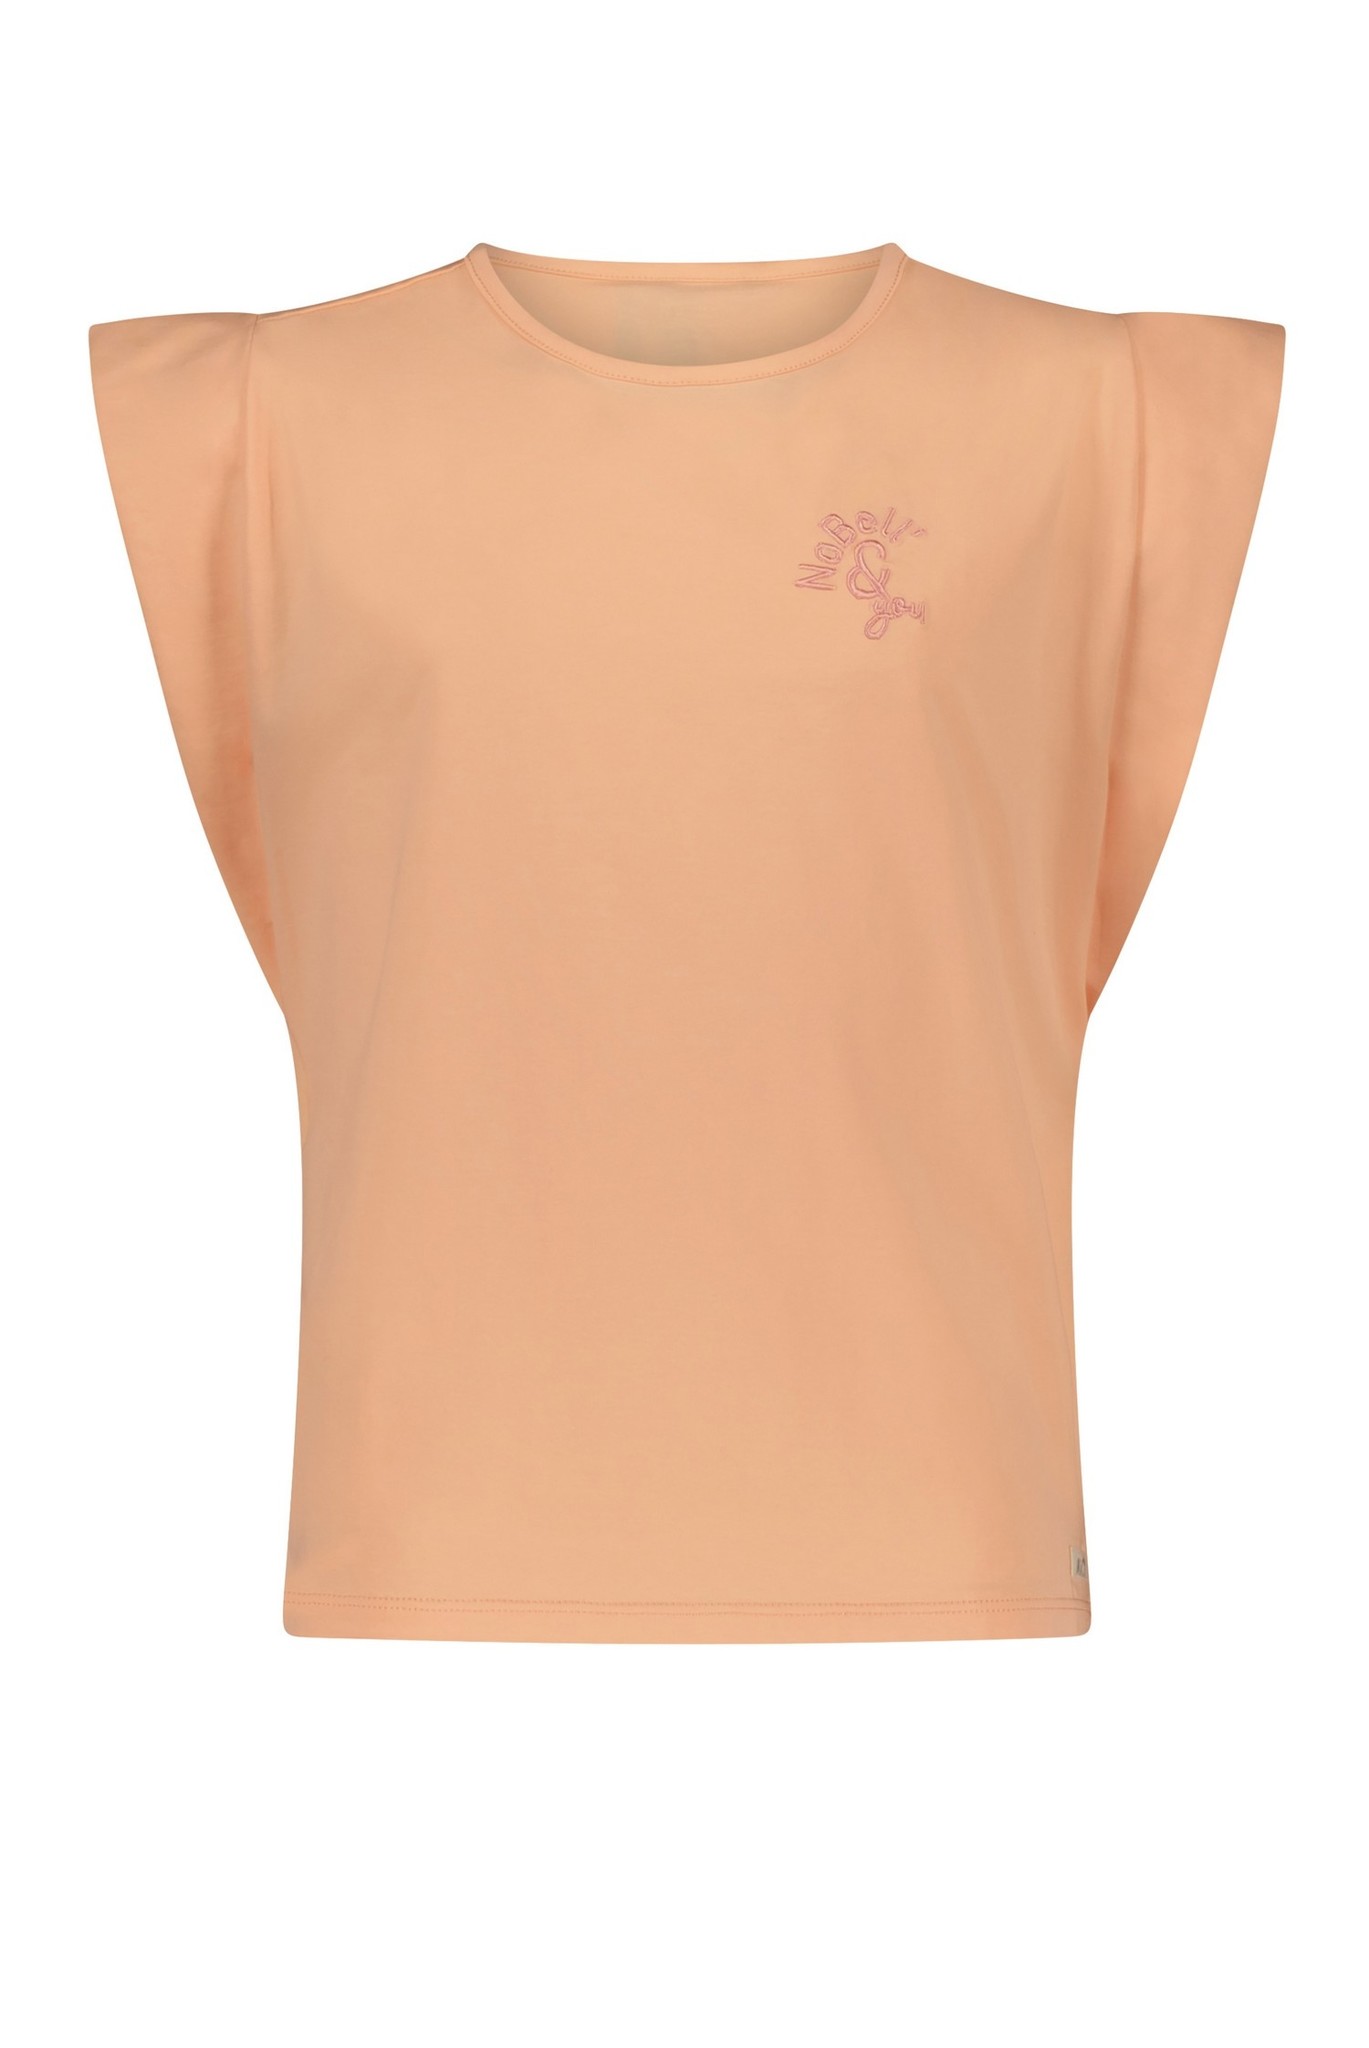 Nobell Kila Tshirt Padded Tops & T-shirts Meisjes - Shirt - Oranje - Maat 122/128